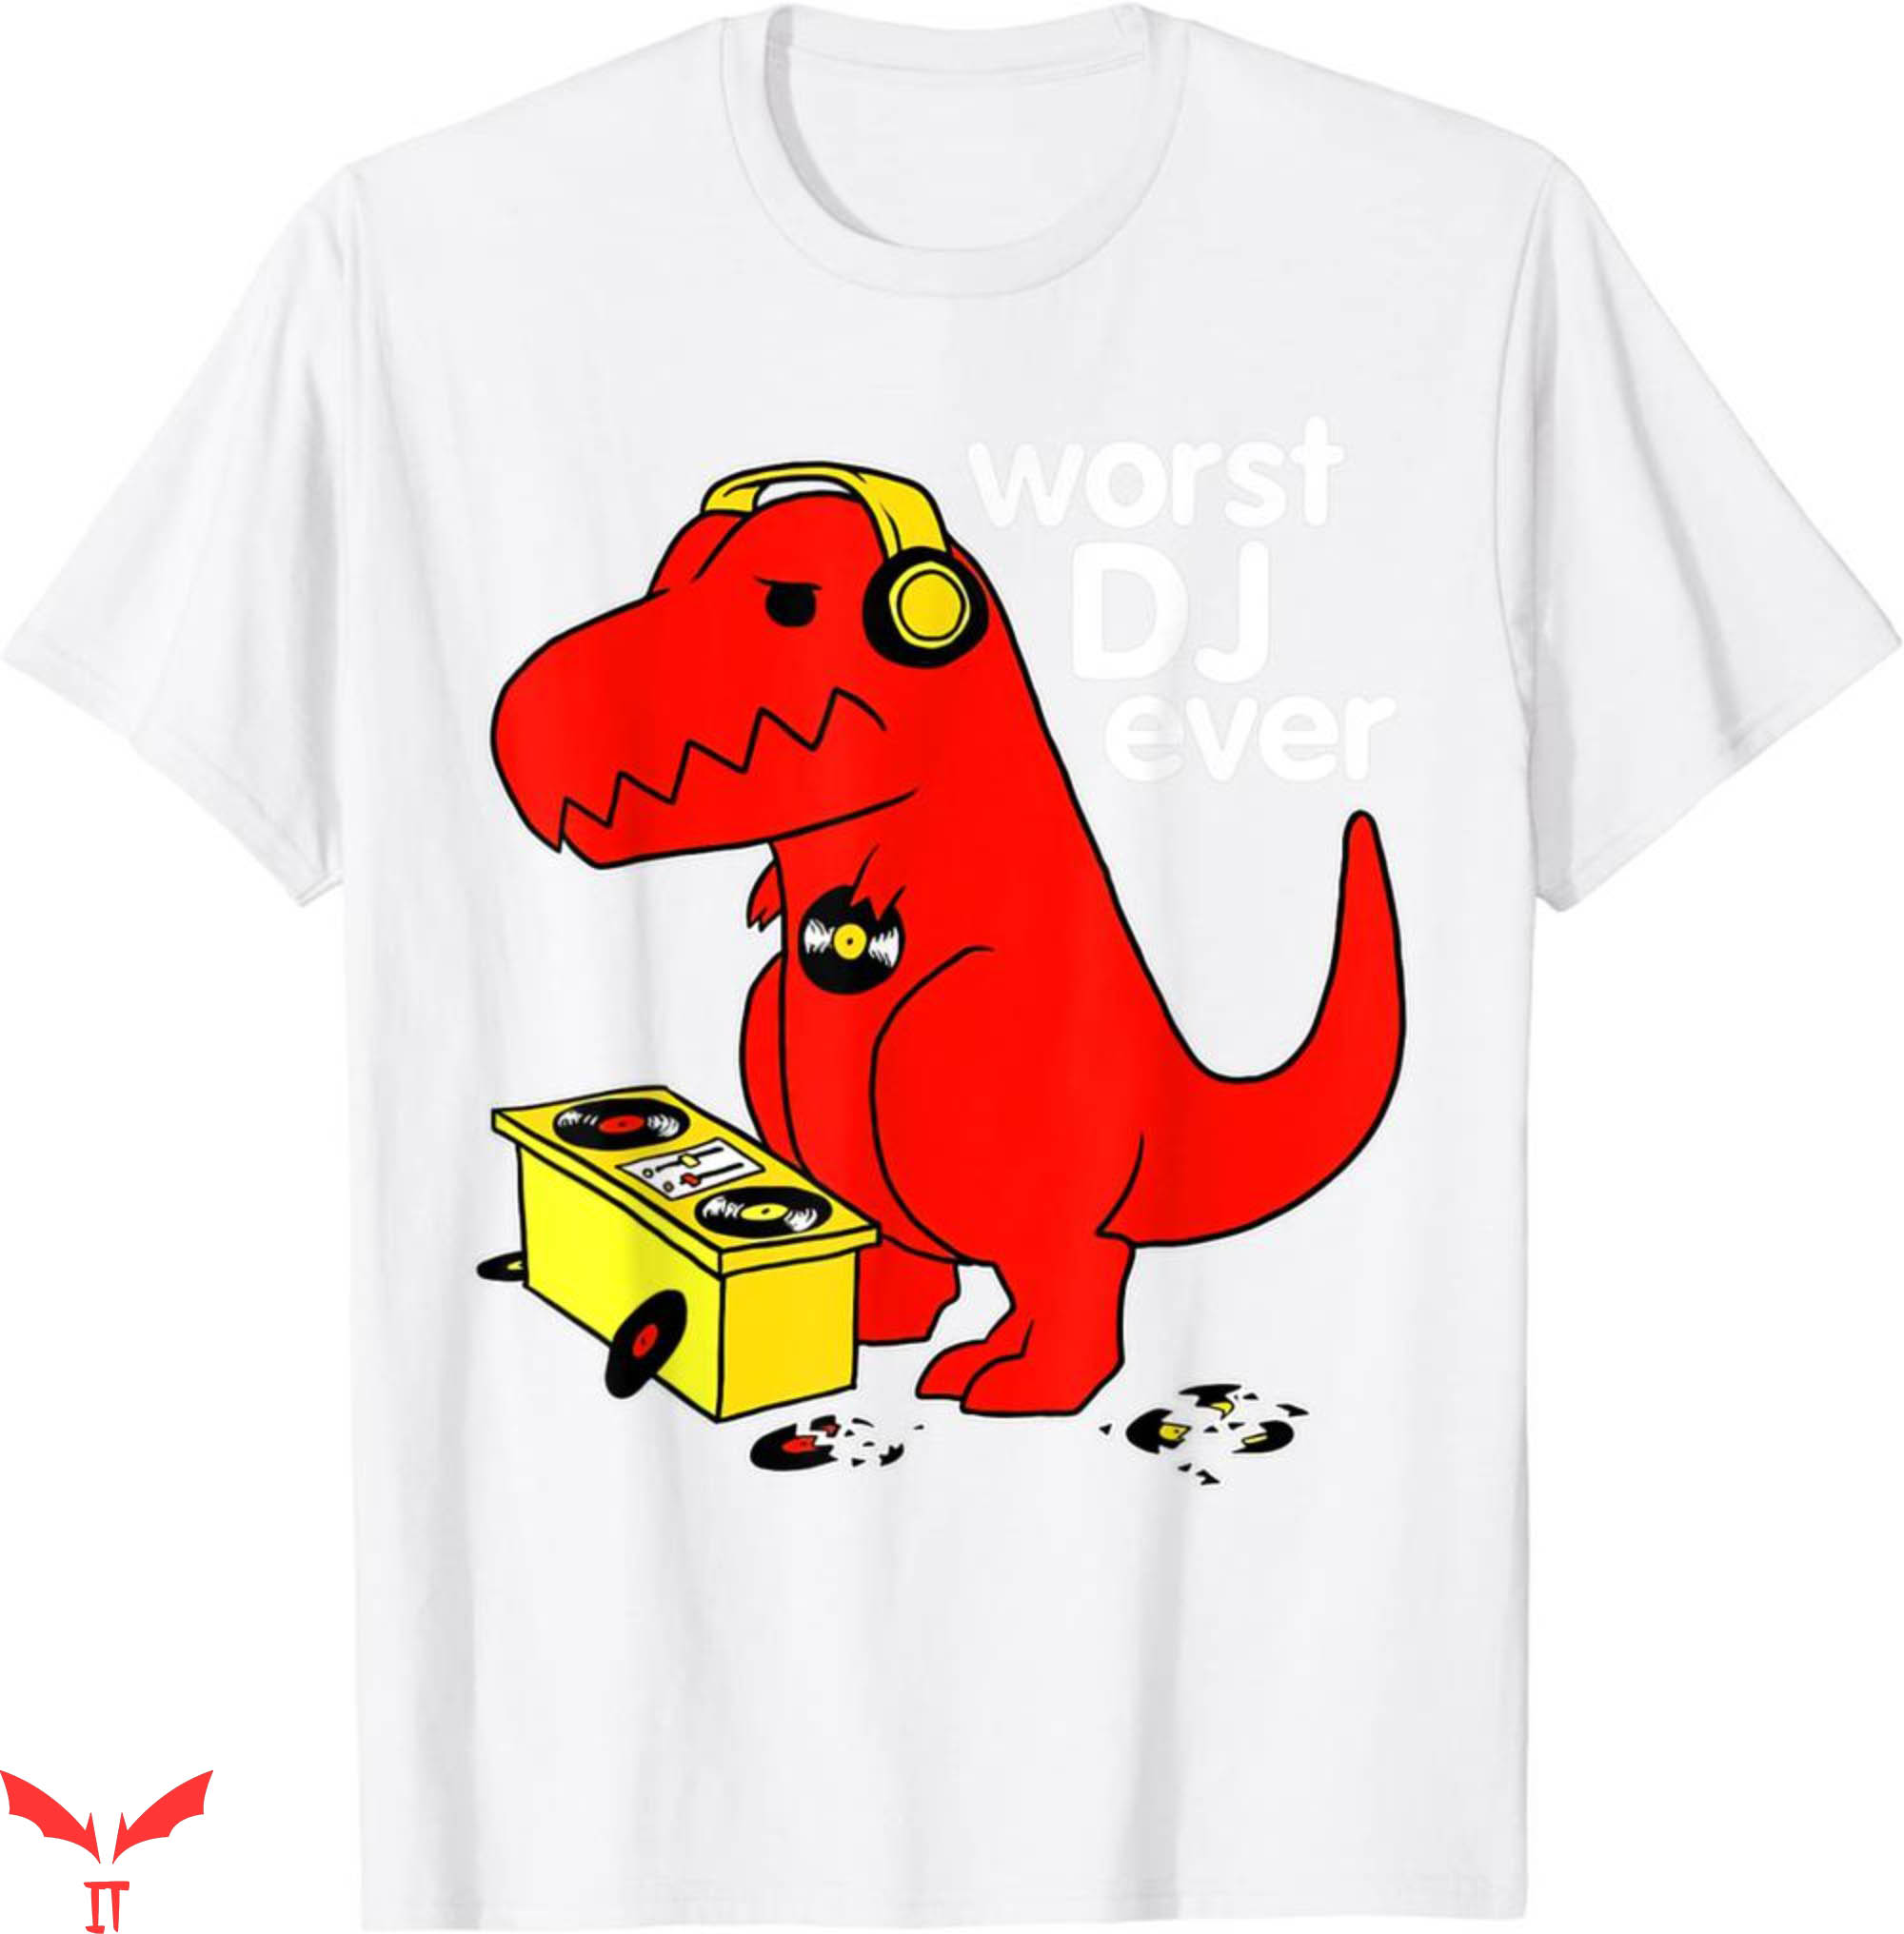 Worst T-Shirt Worst Dj Ever Funny T Rex Dinosaur Sarcastic